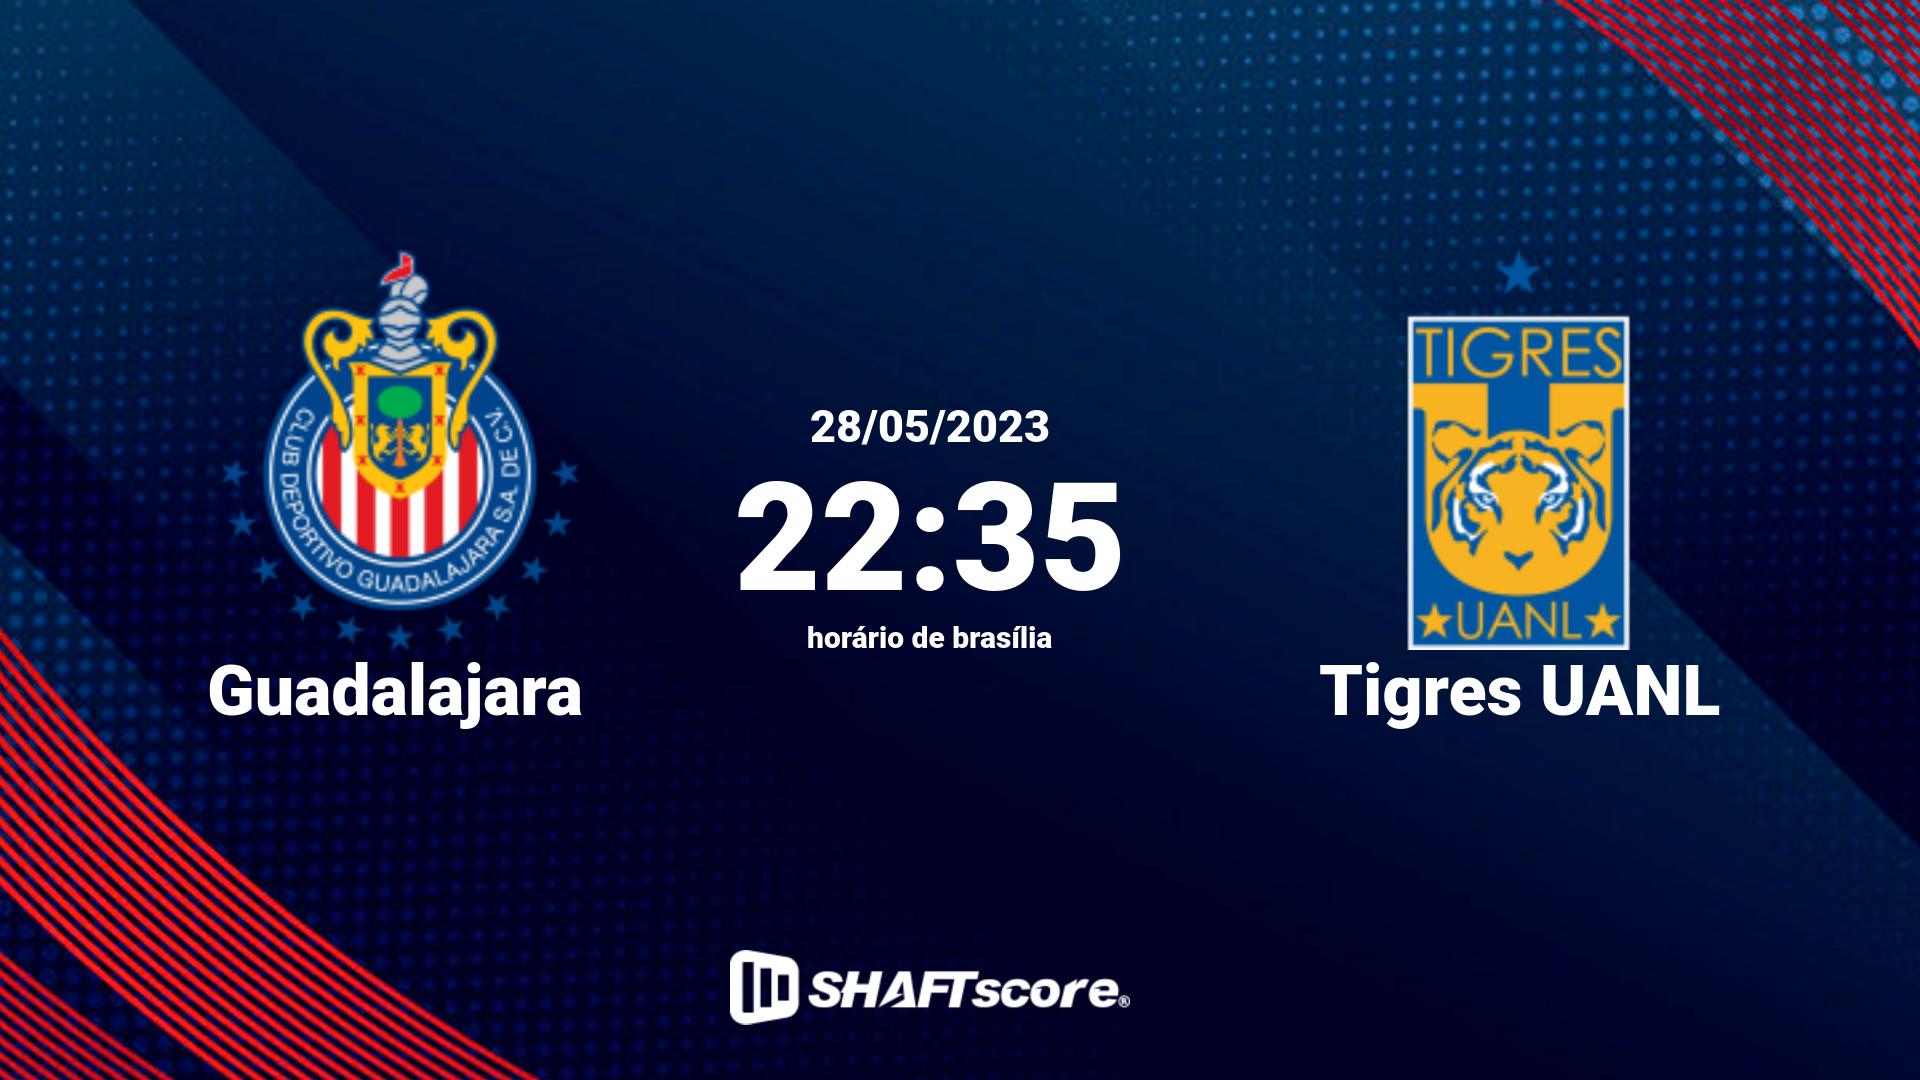 Estatísticas do jogo Guadalajara vs Tigres UANL 28.05 22:35